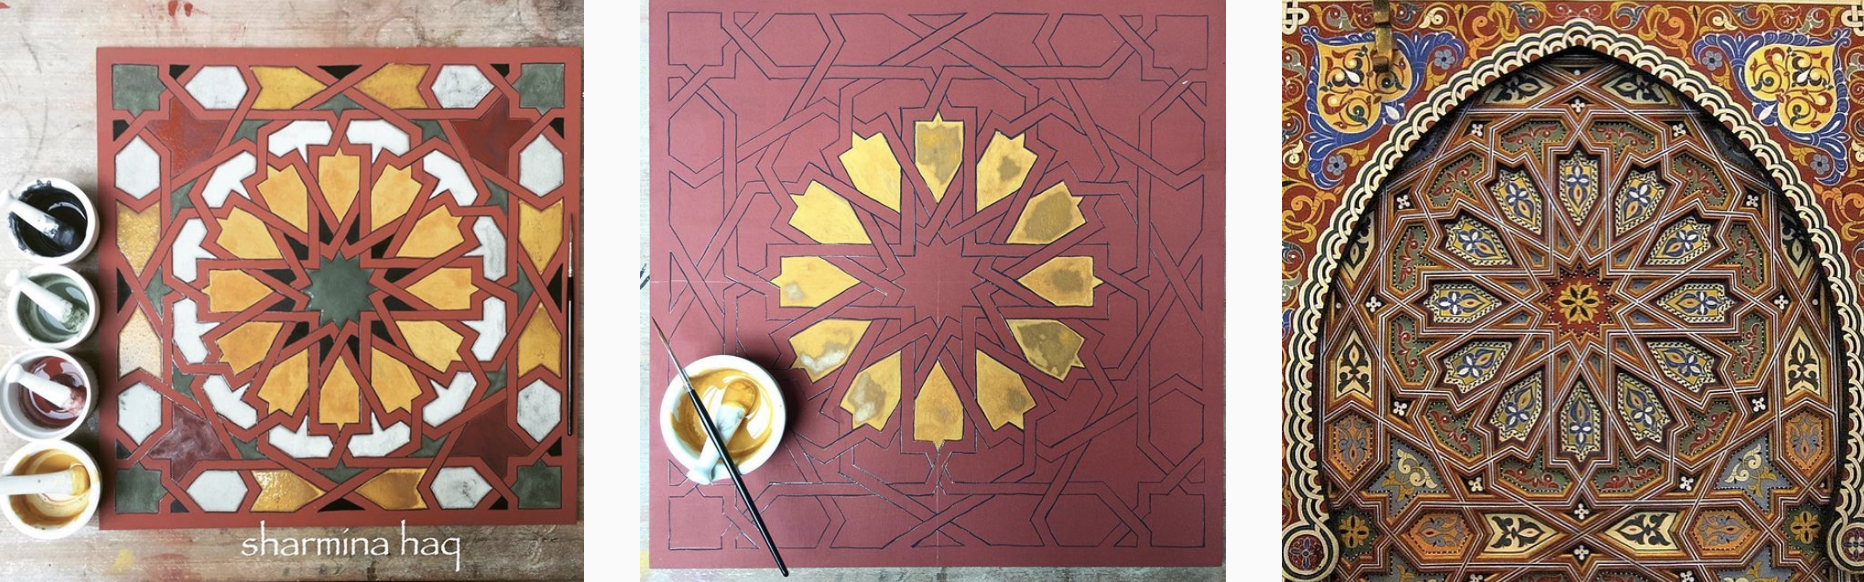 Islamic geometric designs